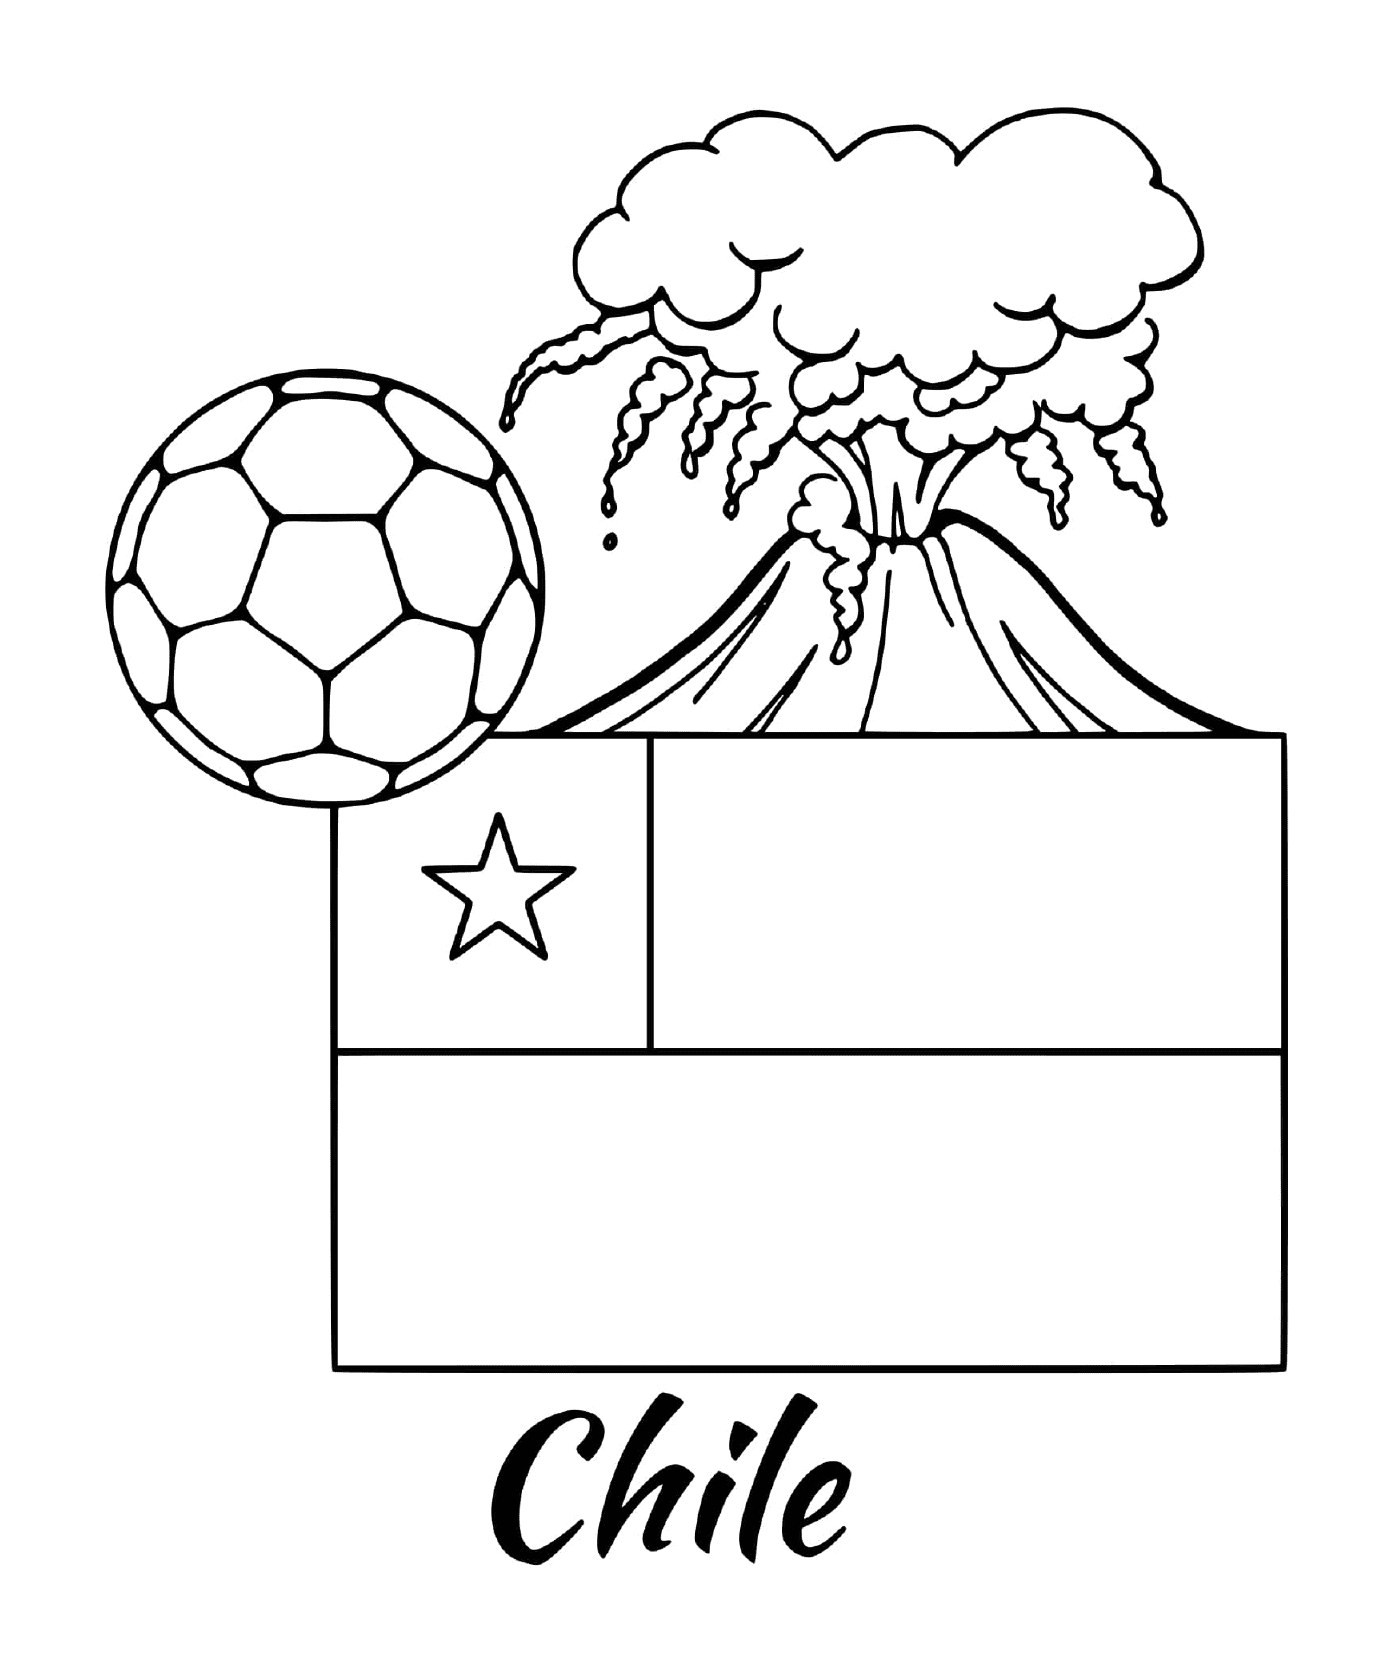   Drapeau du Chili, volcan 